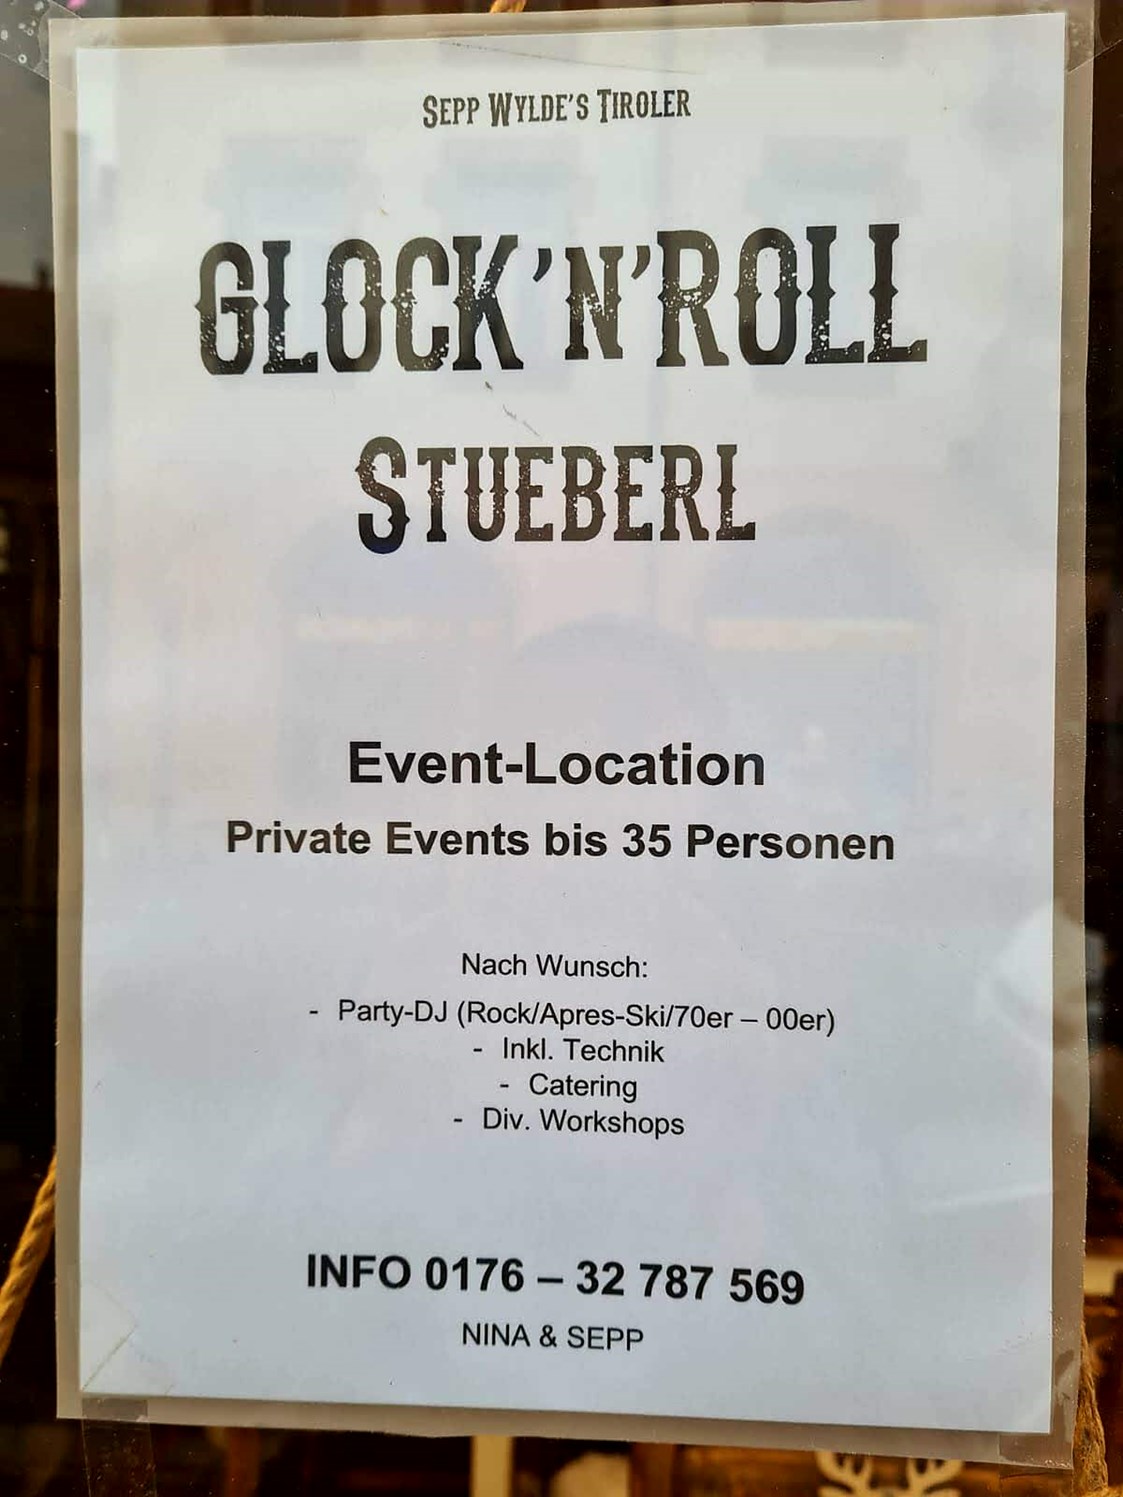 Location: House of Glock´n Roll - Hard Glock Cafe Nürnberg